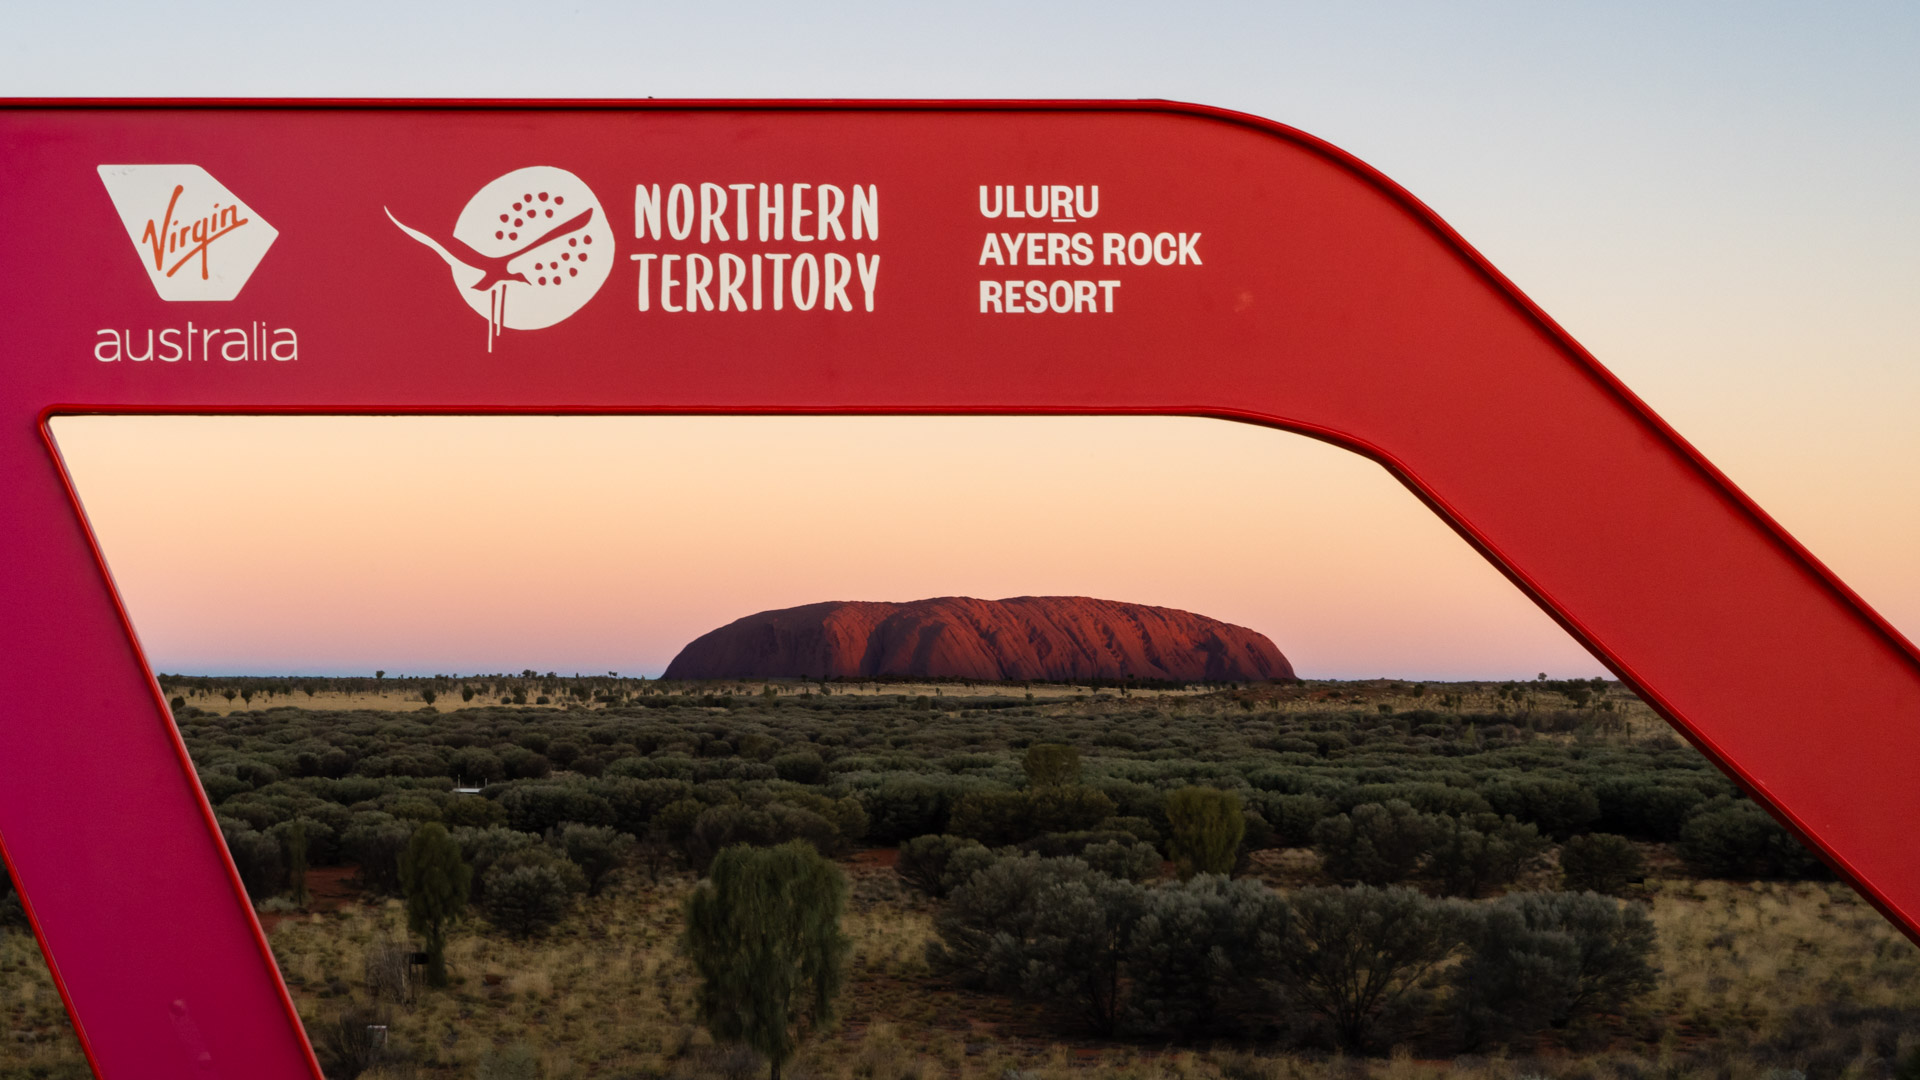 Virgin Australia Uluru signage